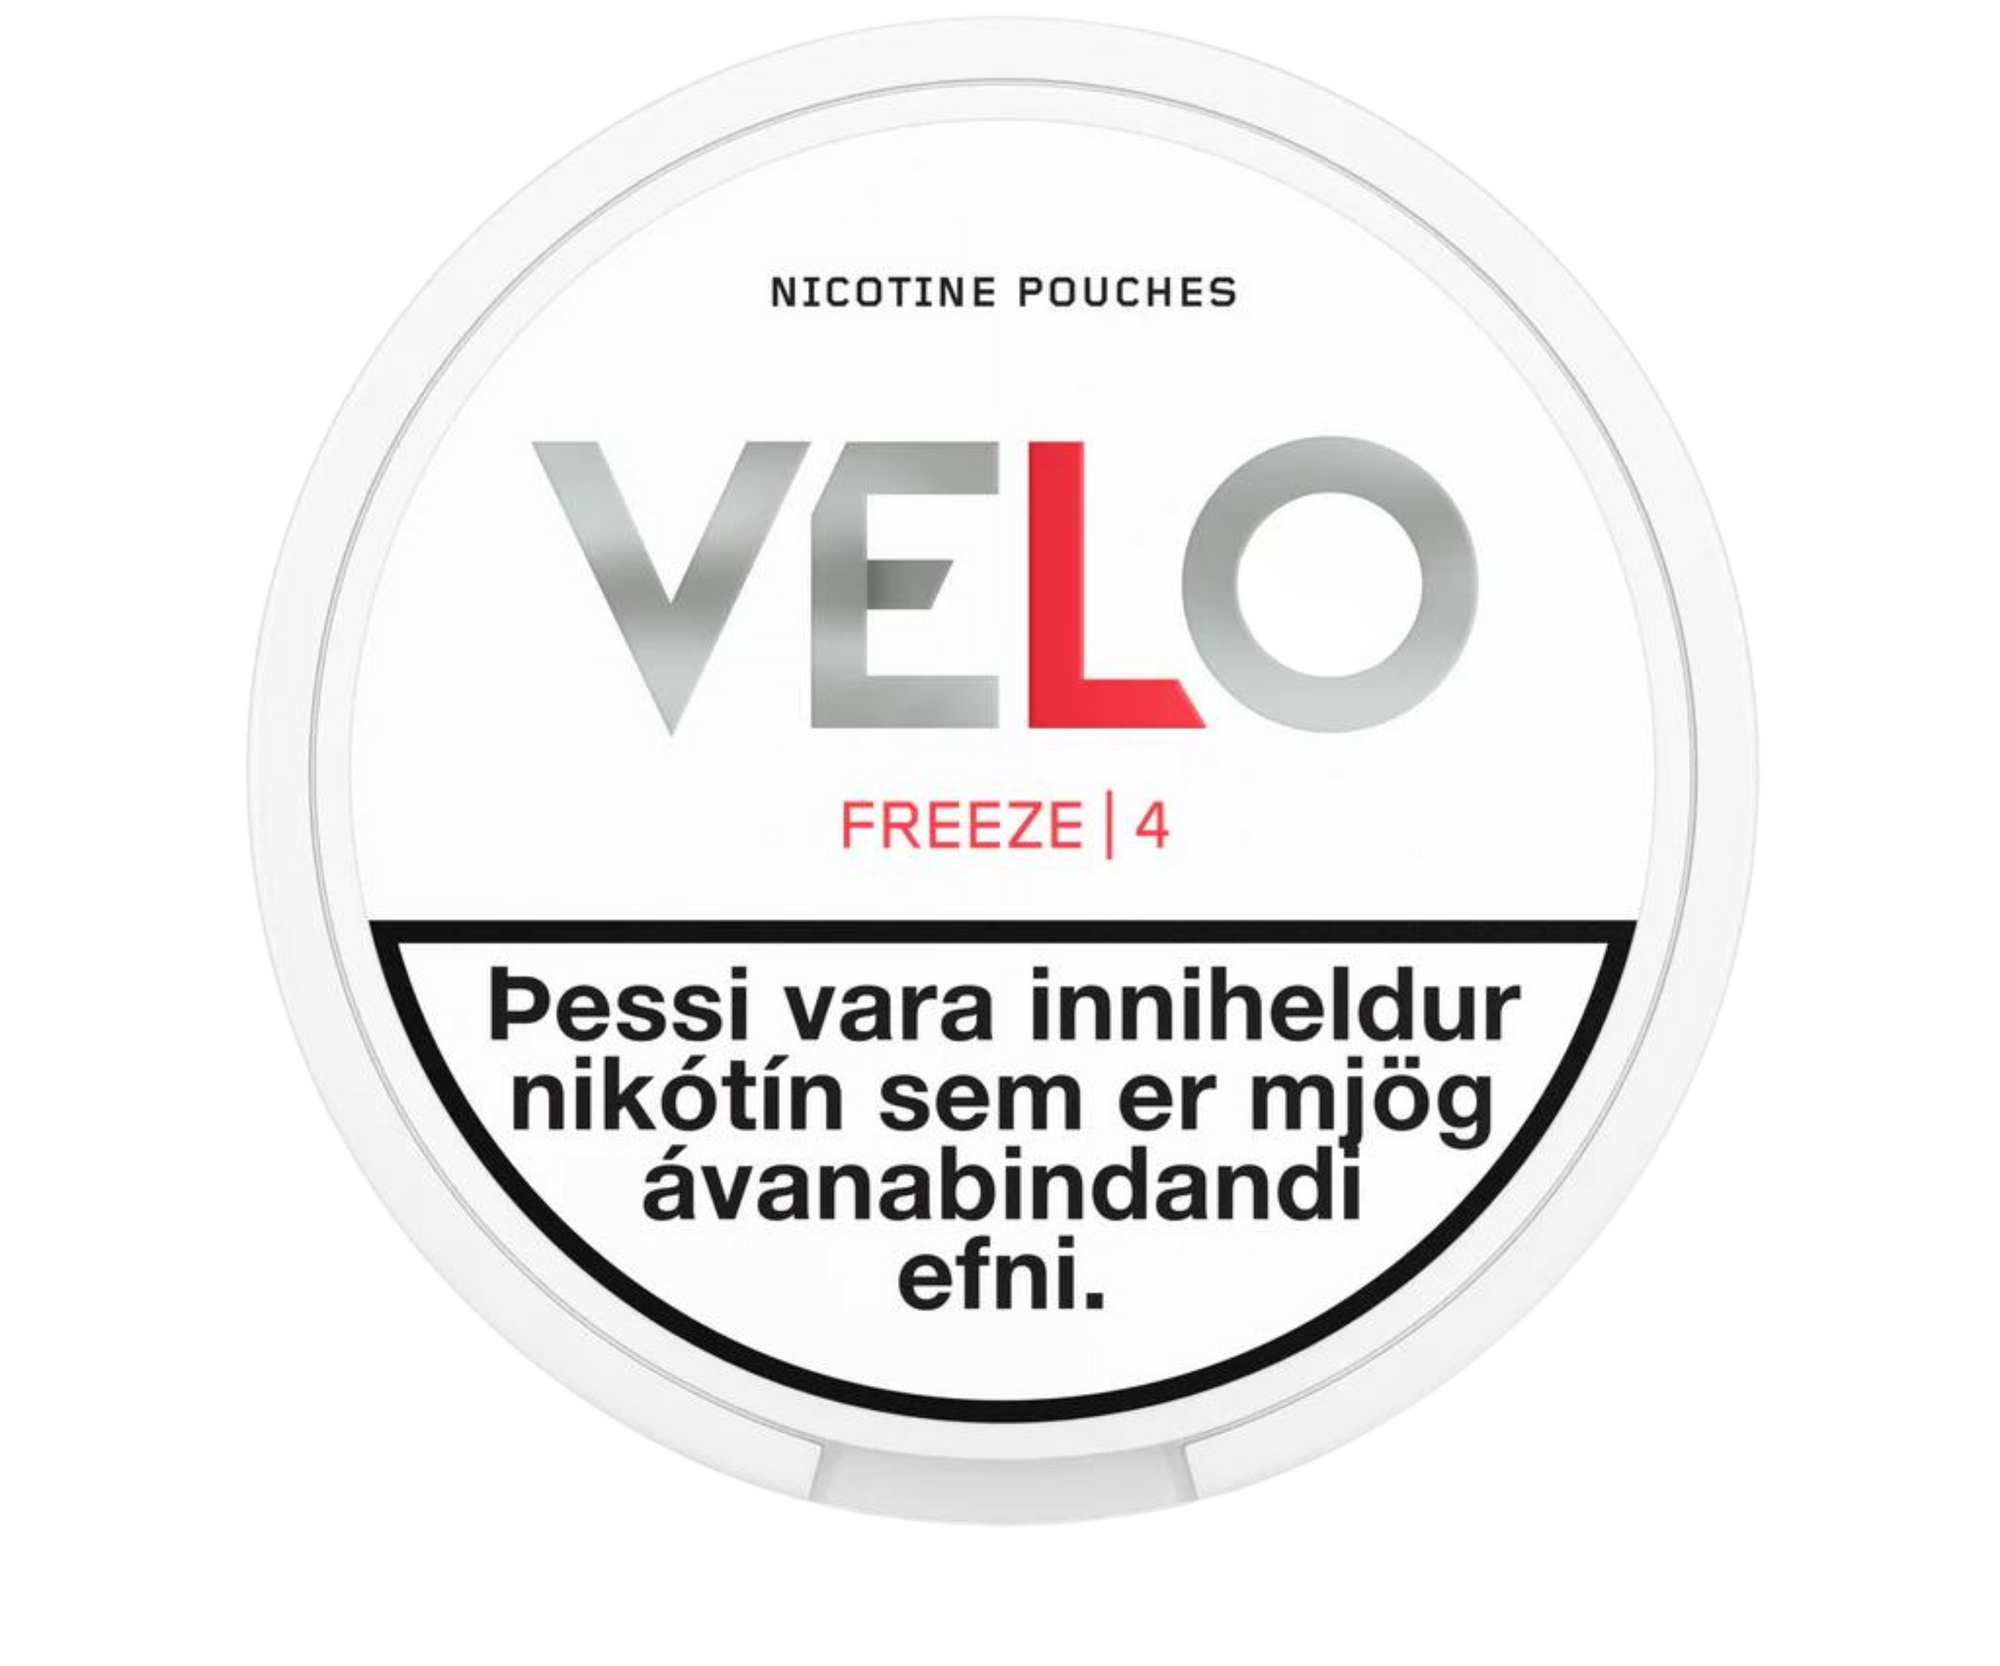 VELO Freeze - Nammi.net